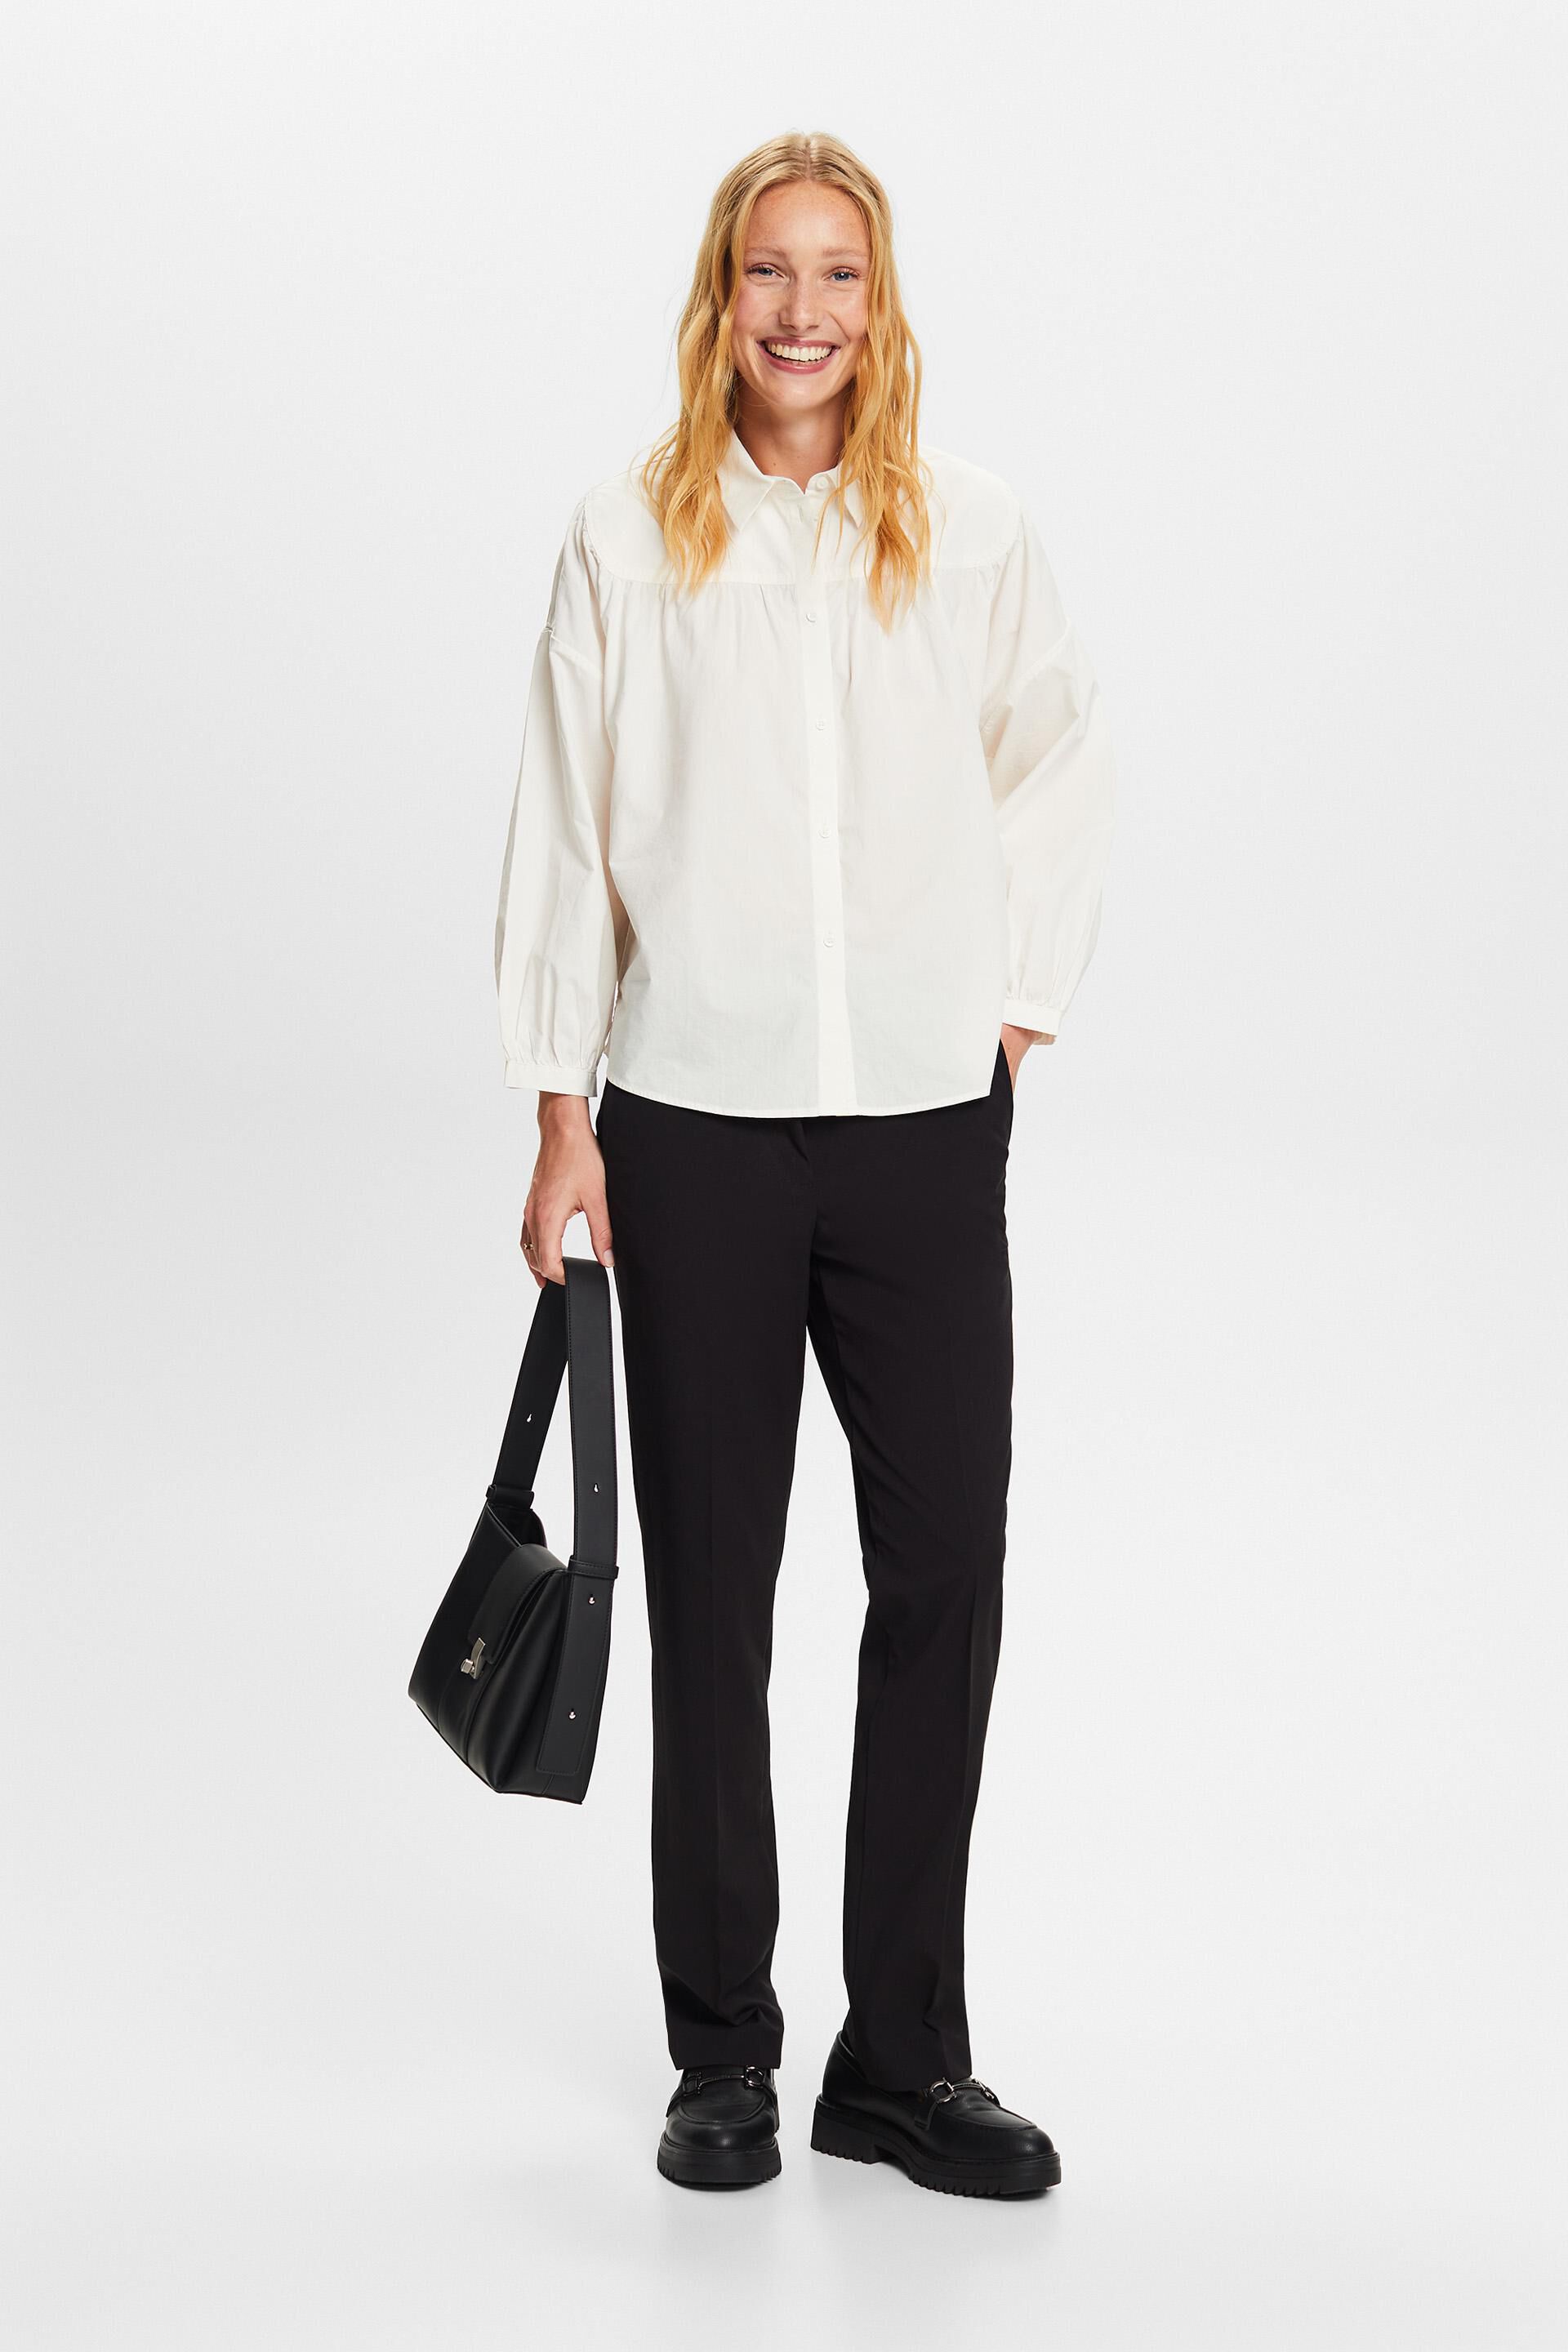 Esprit 100% blouse, Poplin cotton